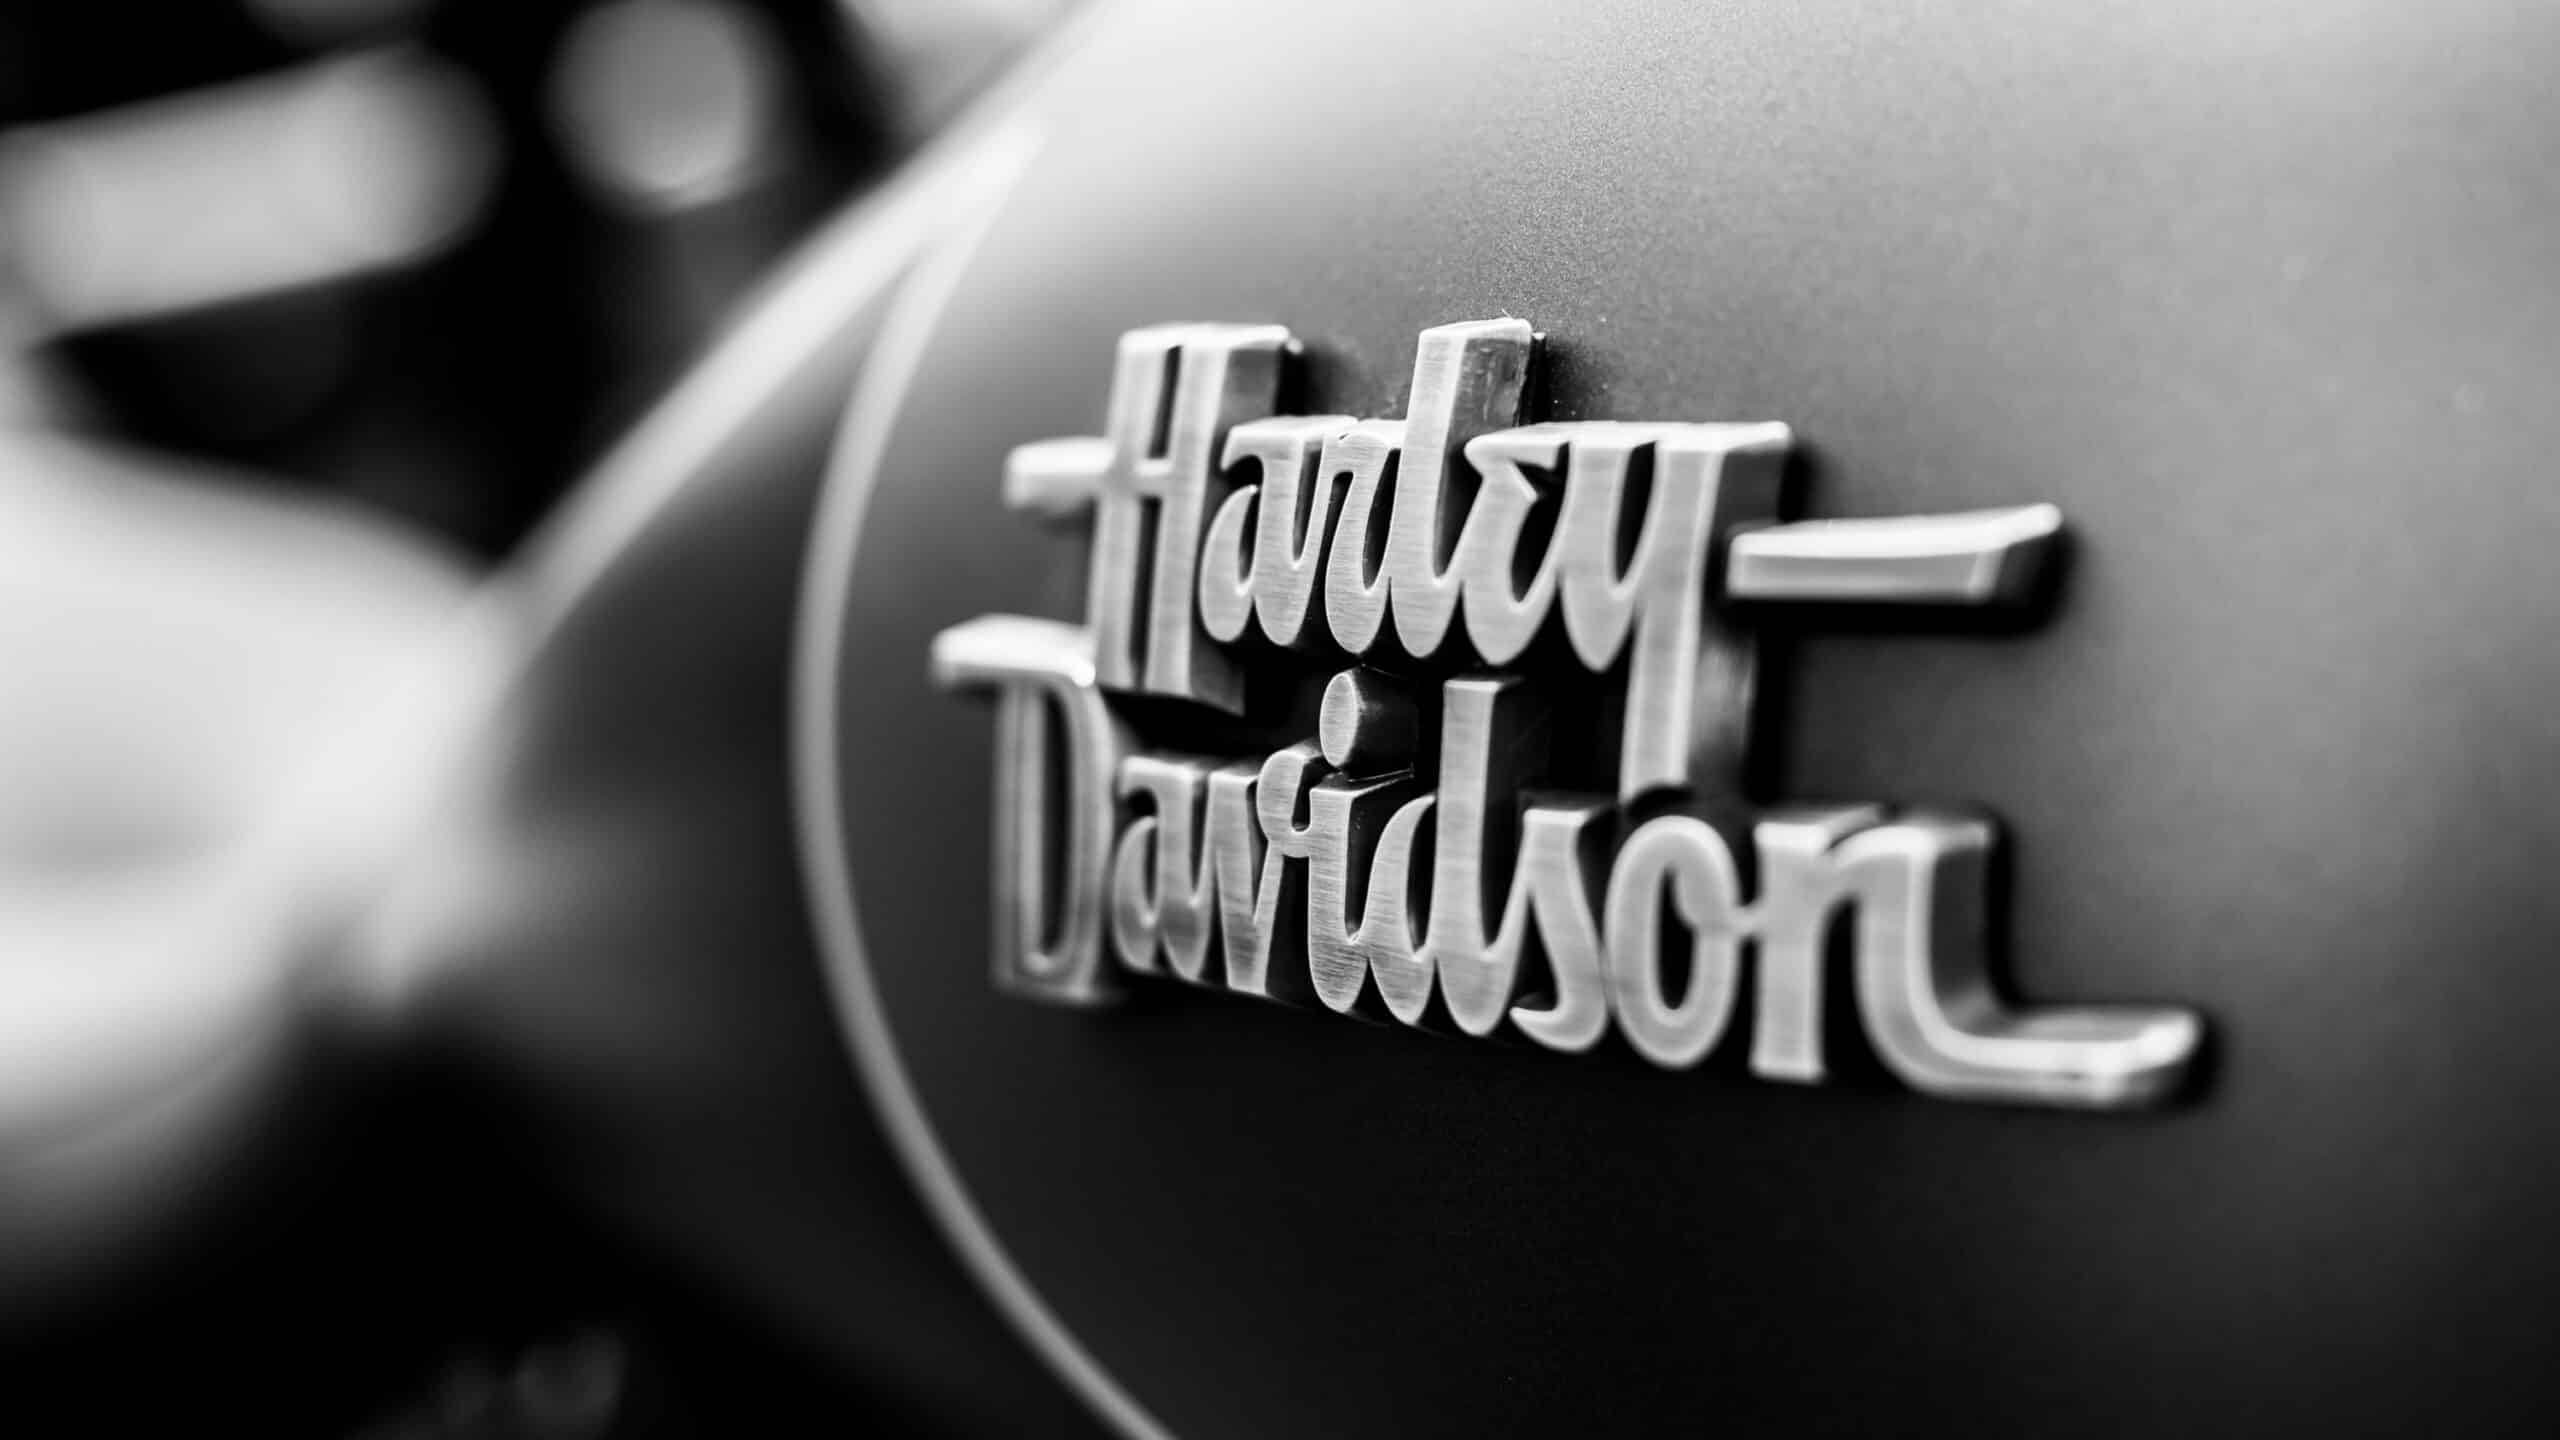 Harley Davidson sign on a bike